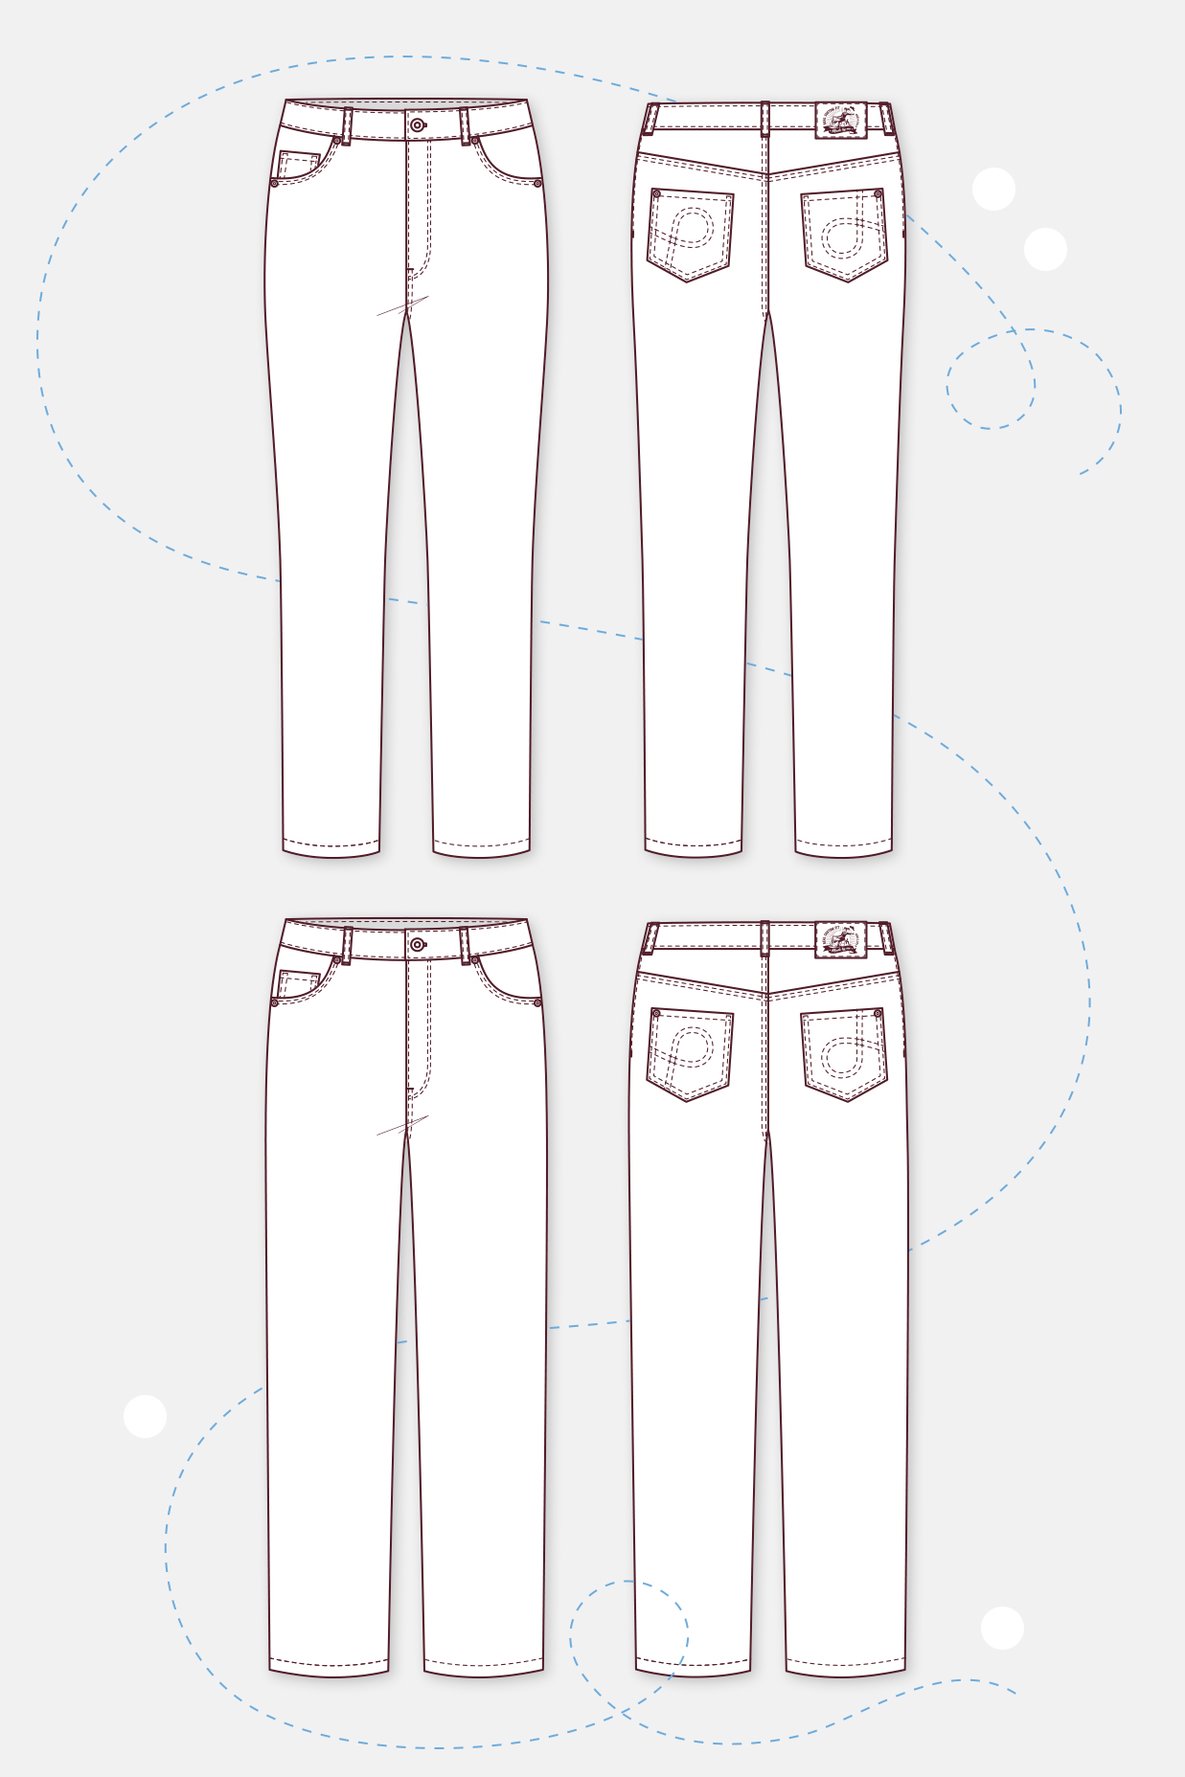 Pattydoo jeans high waist, slim/straight legs 32-54